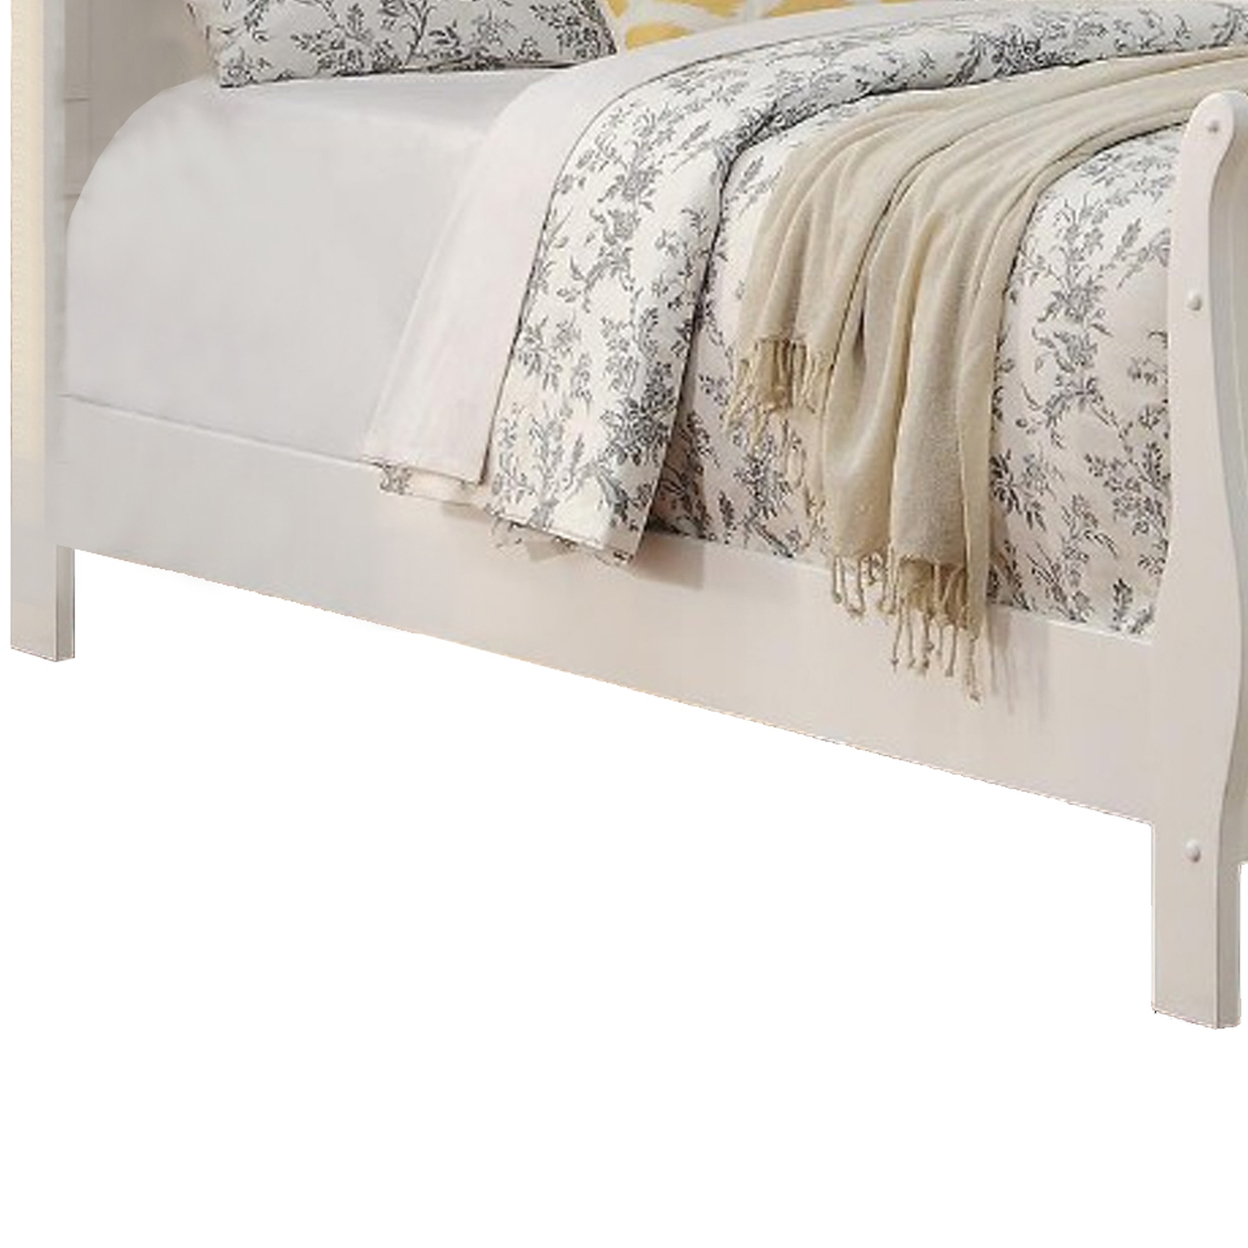 Spellbinding Clean Wooden Twin Bed, White- Saltoro Sherpi